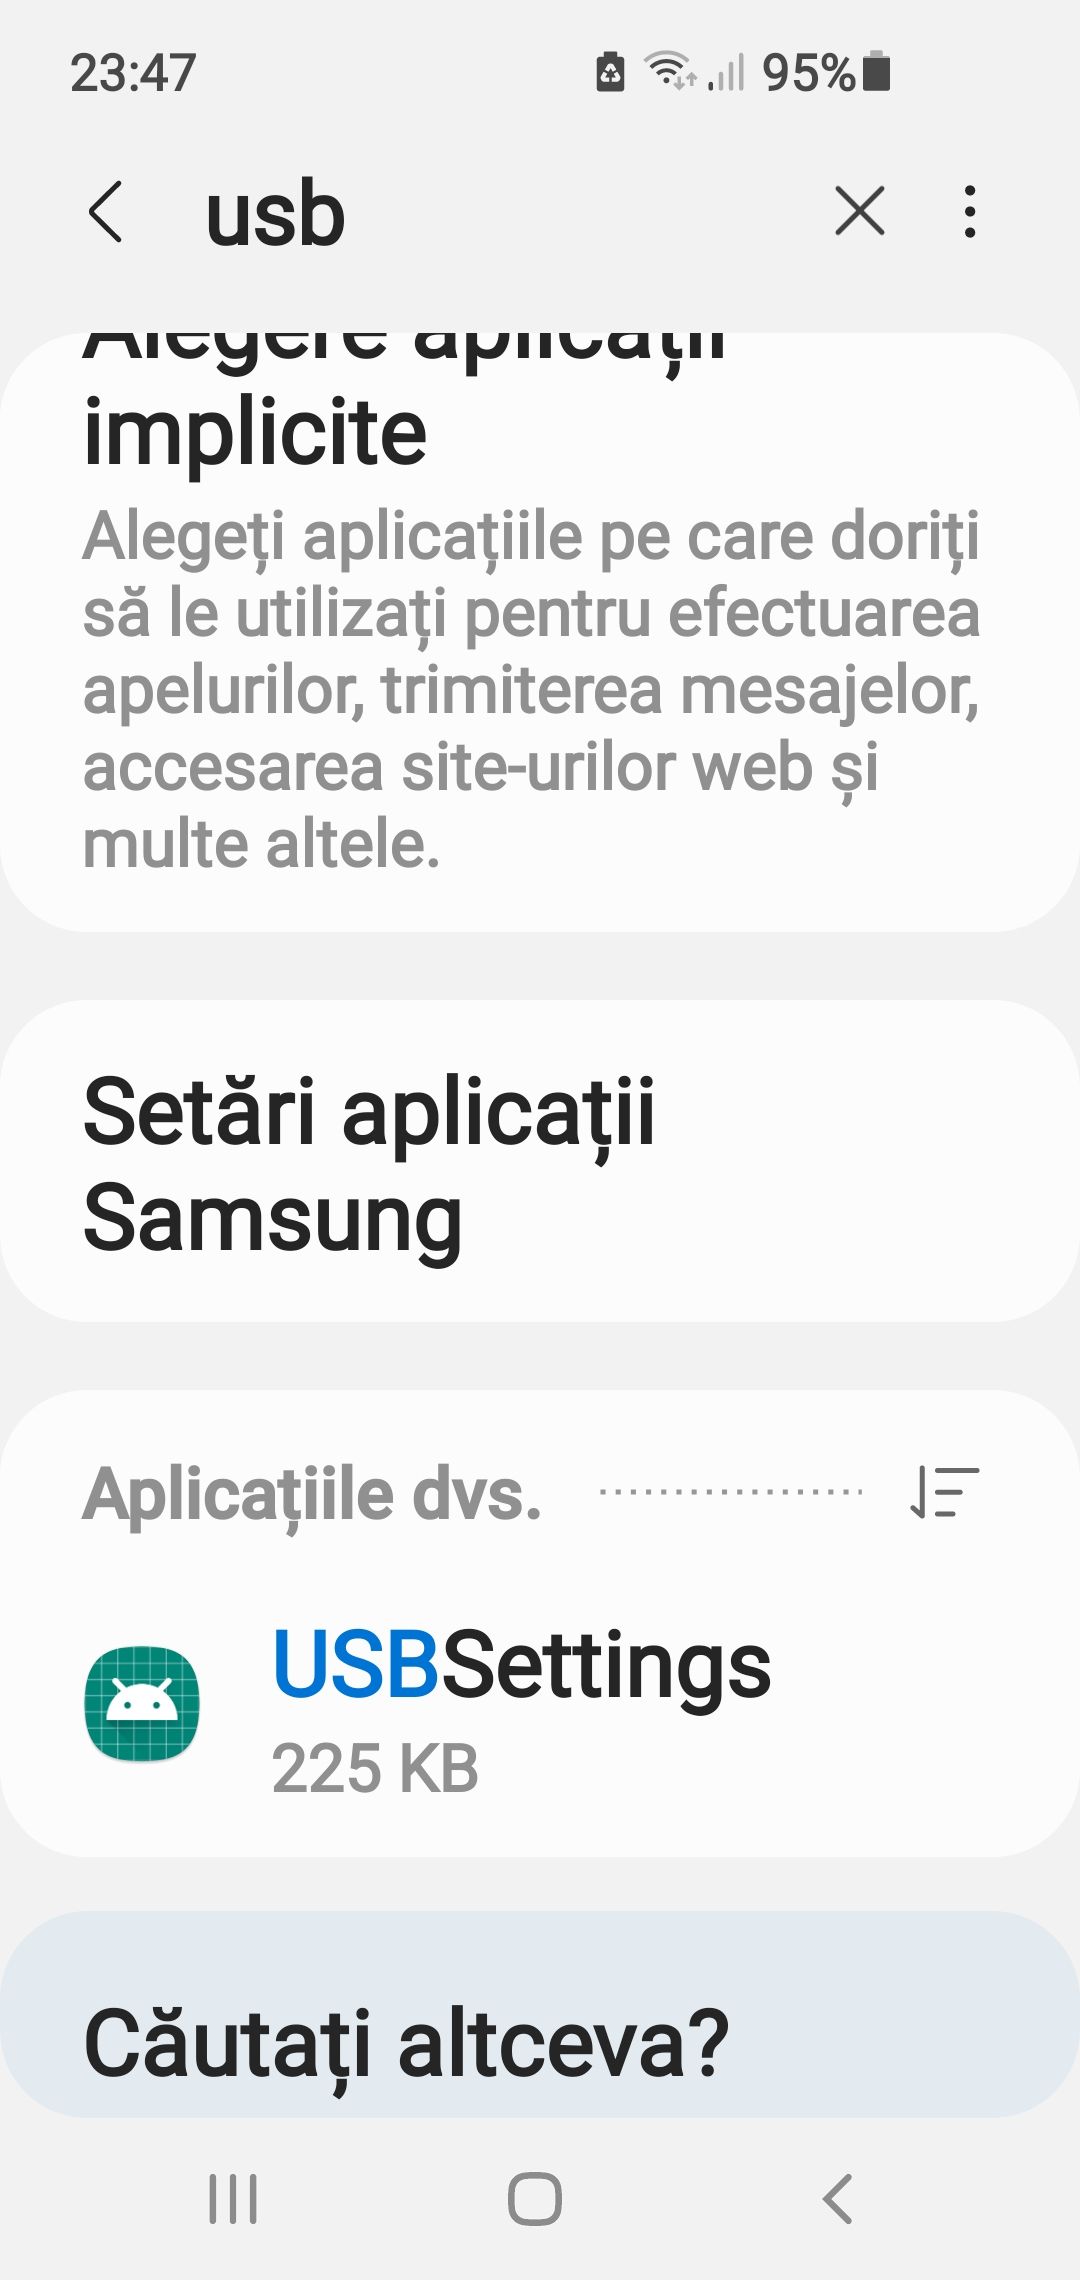 Samsung Galaxy S10e umiditate prot usb - Samsung Community